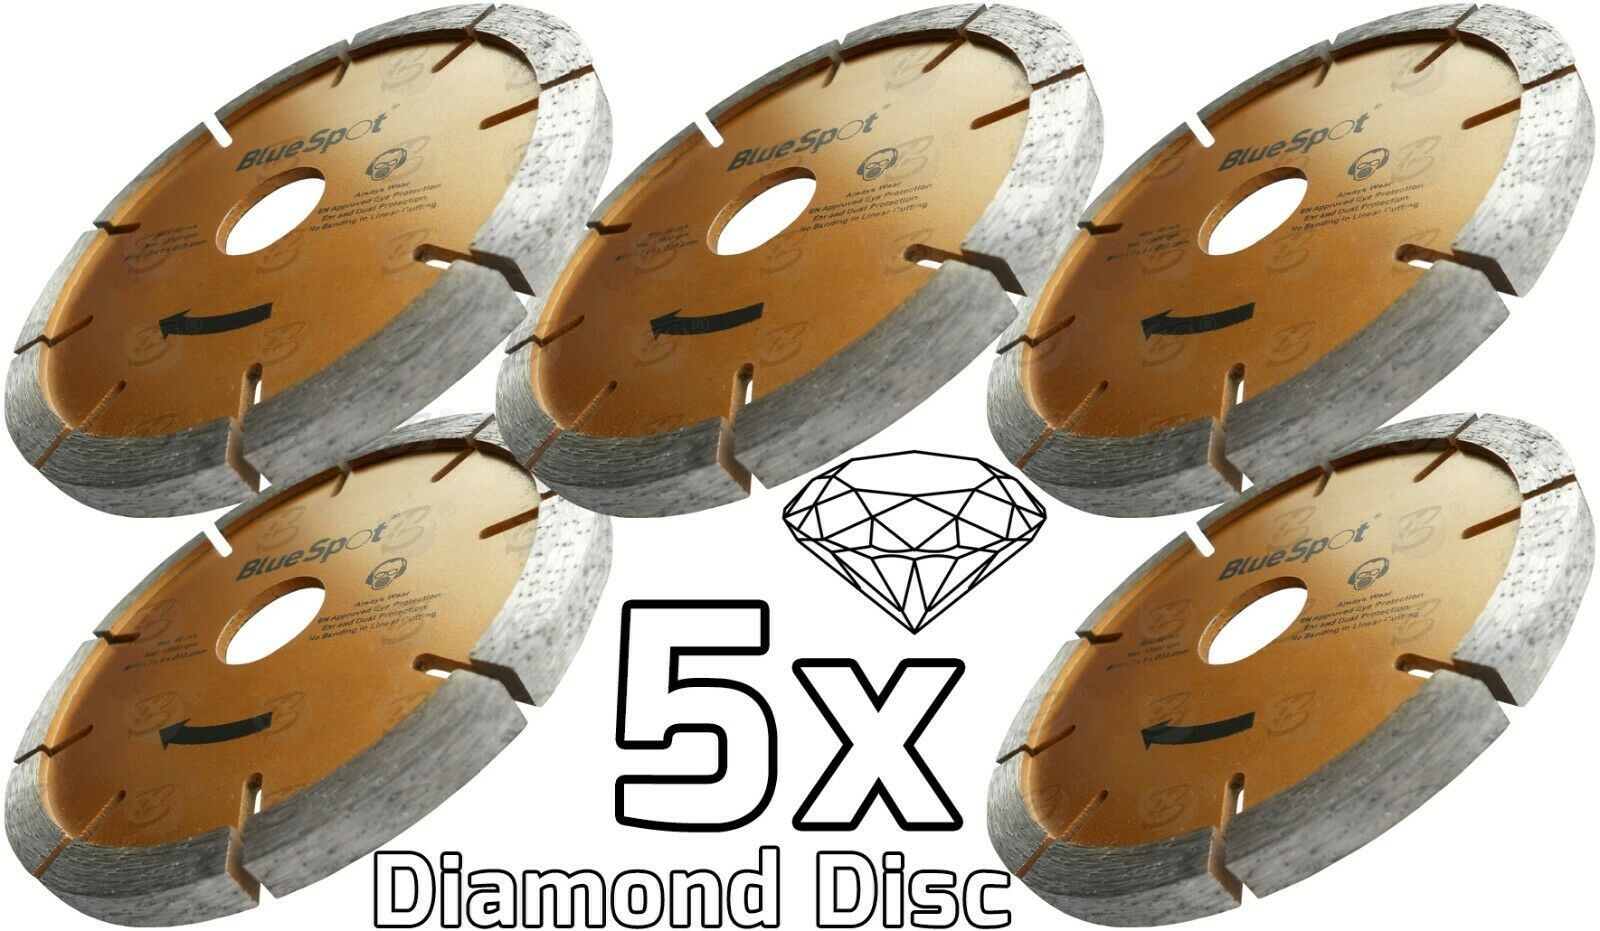 BLUESPOT 4.5" ( 115MM ) DIAMOND MORTAR RAKING DISC ( x 5 )